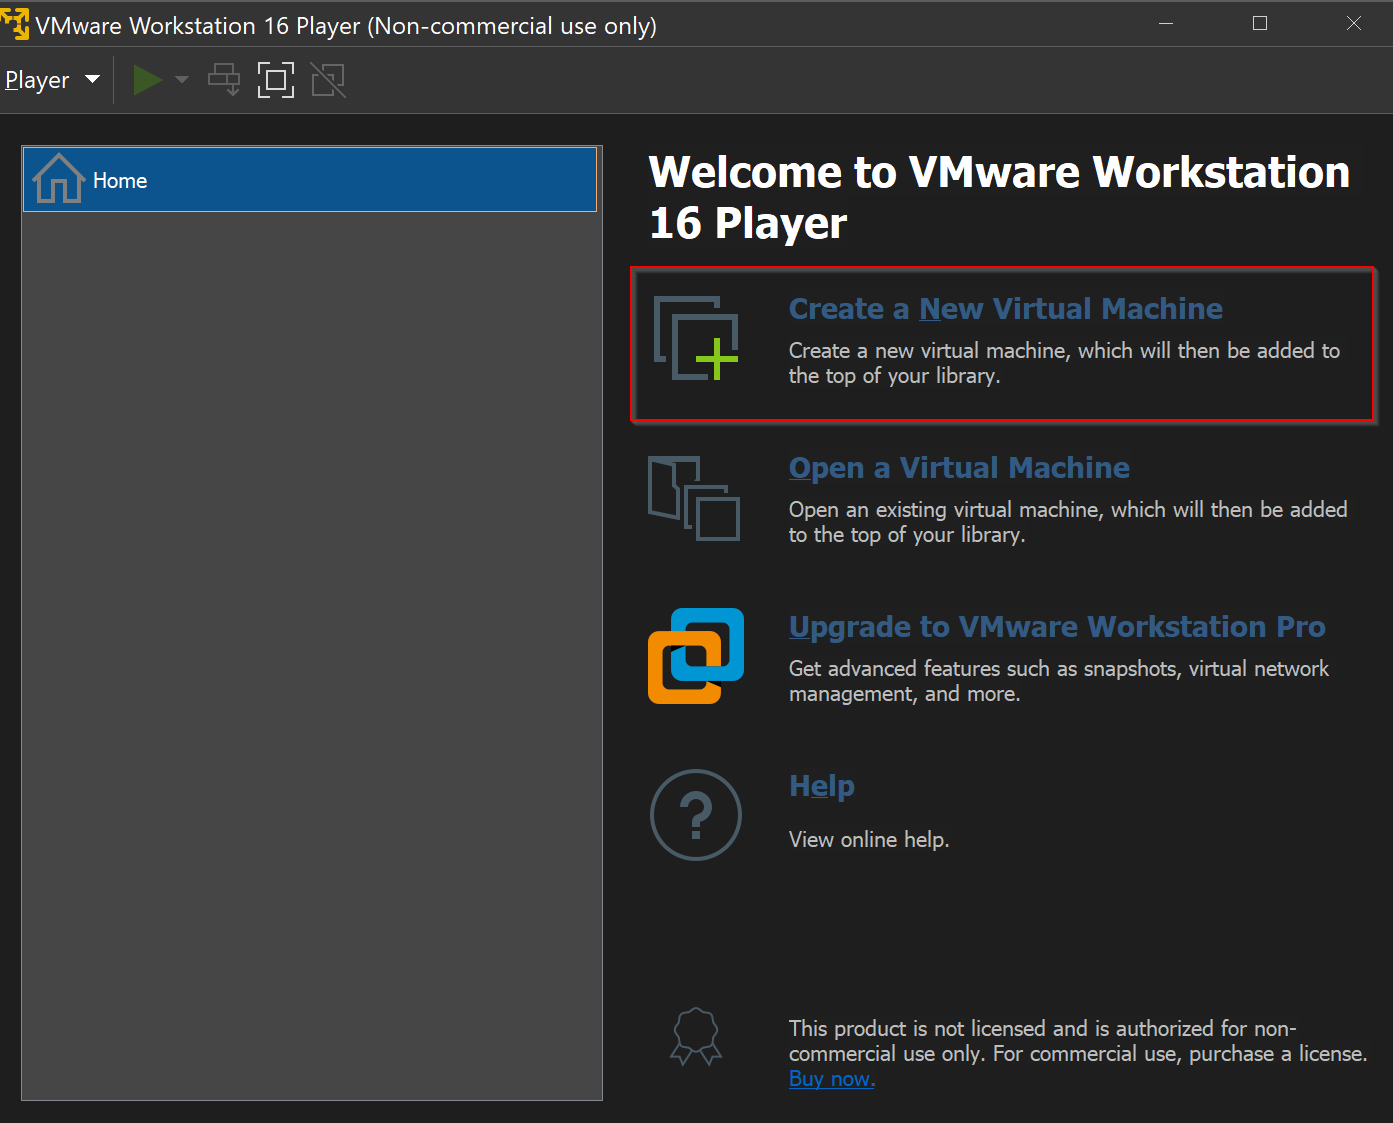 download vmware tools iso windows